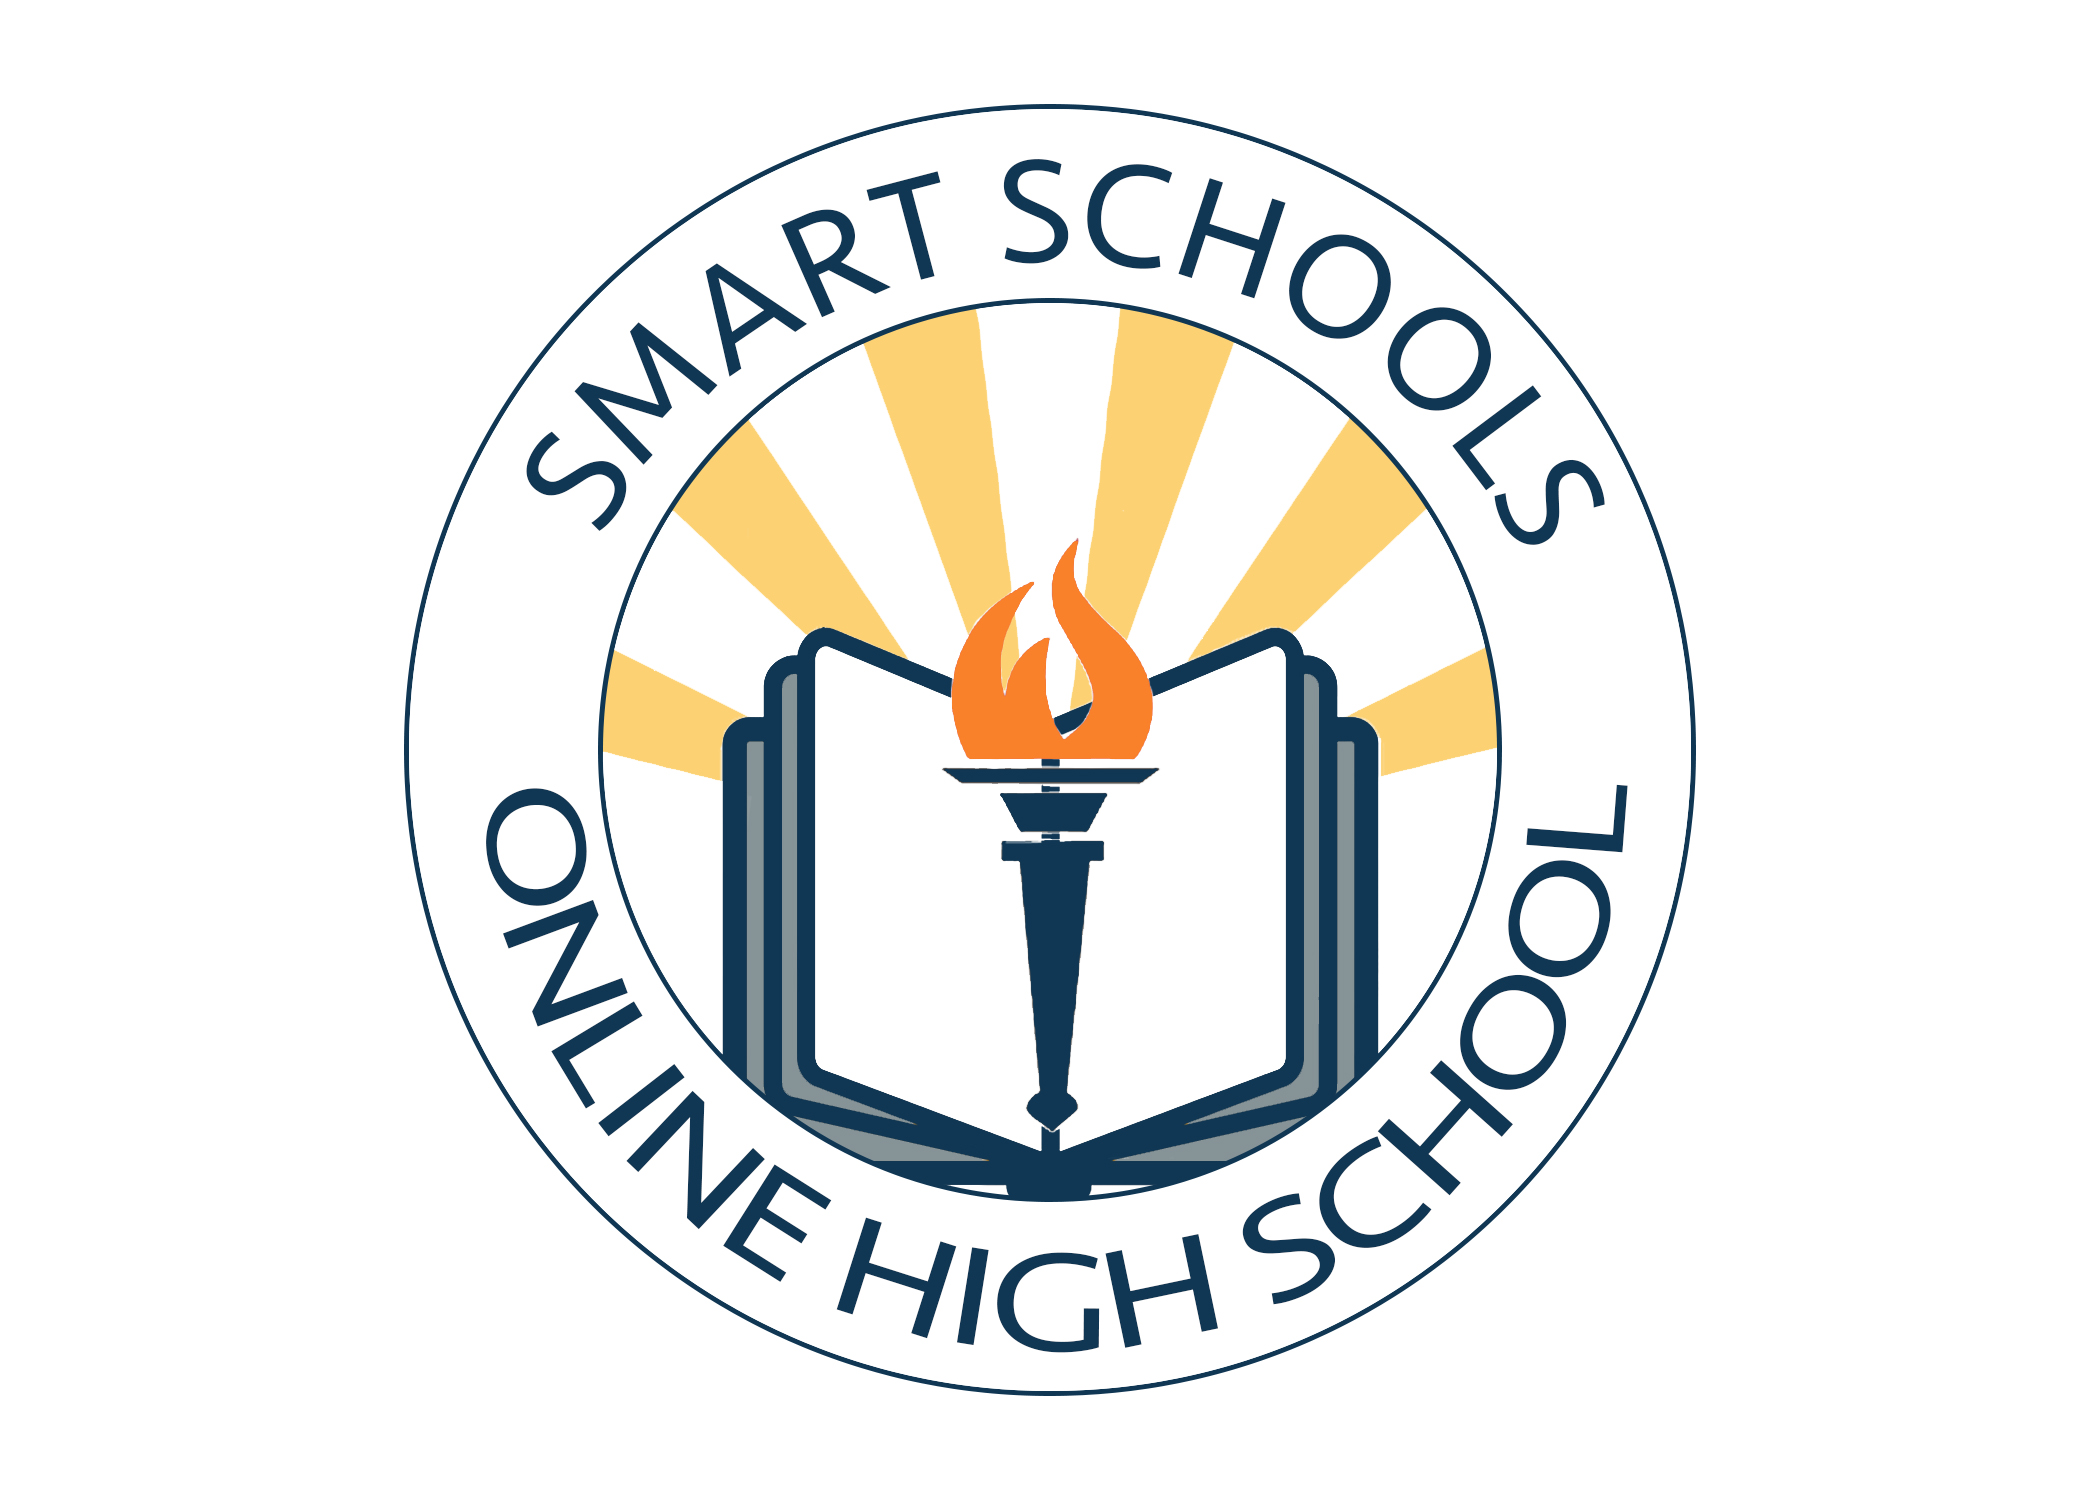 High School Diploma logo